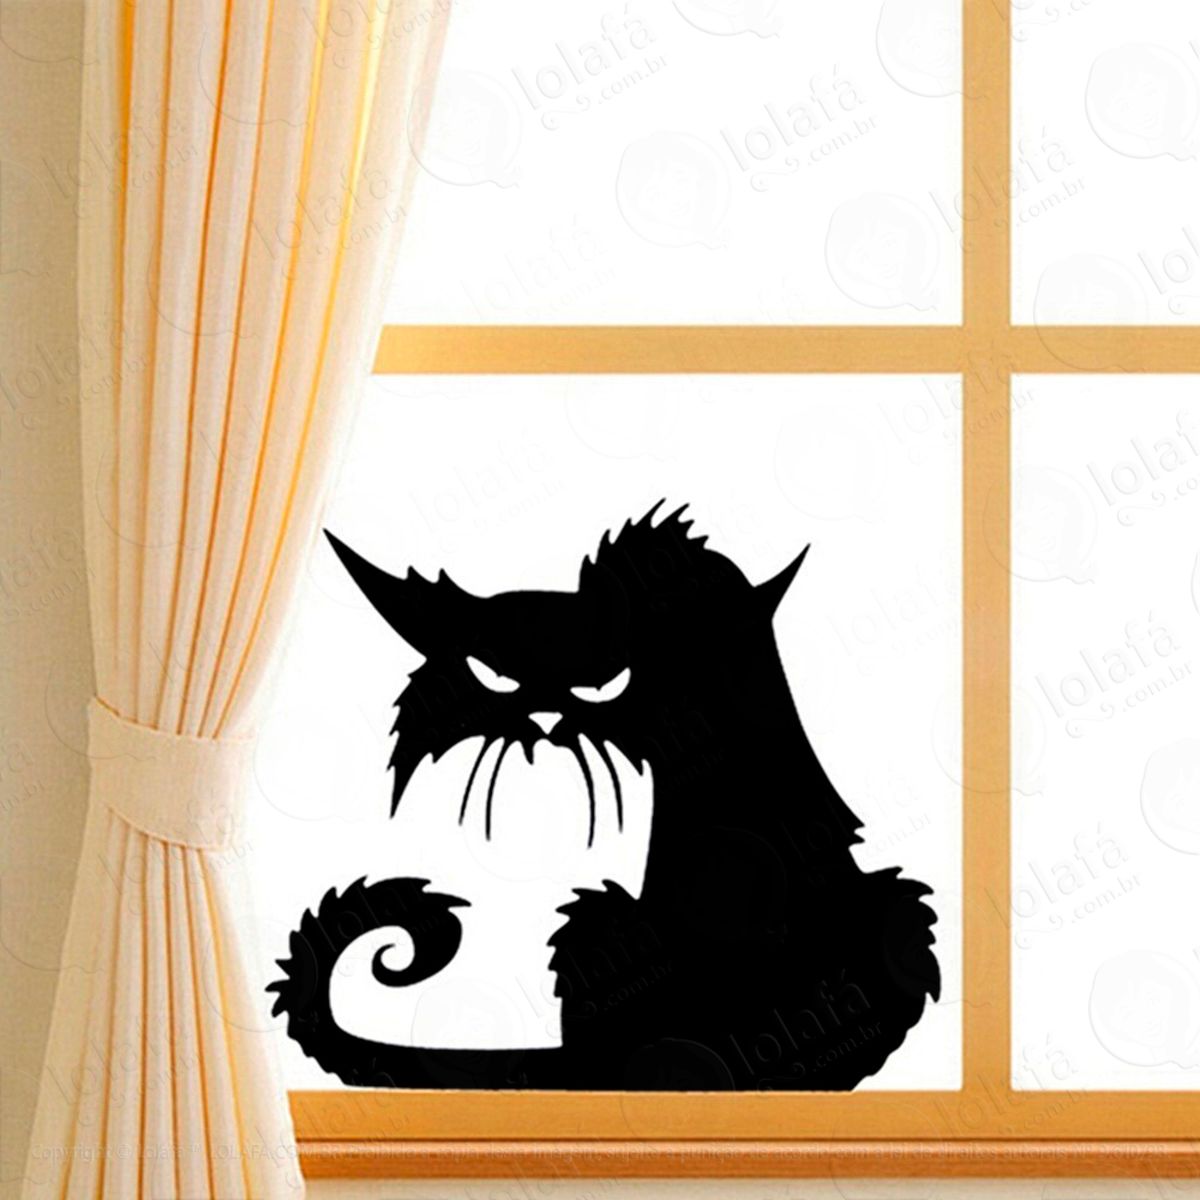 gato mal-humorado adesivo de parede decorativo para casa, sala, quarto e vidro - mod:54